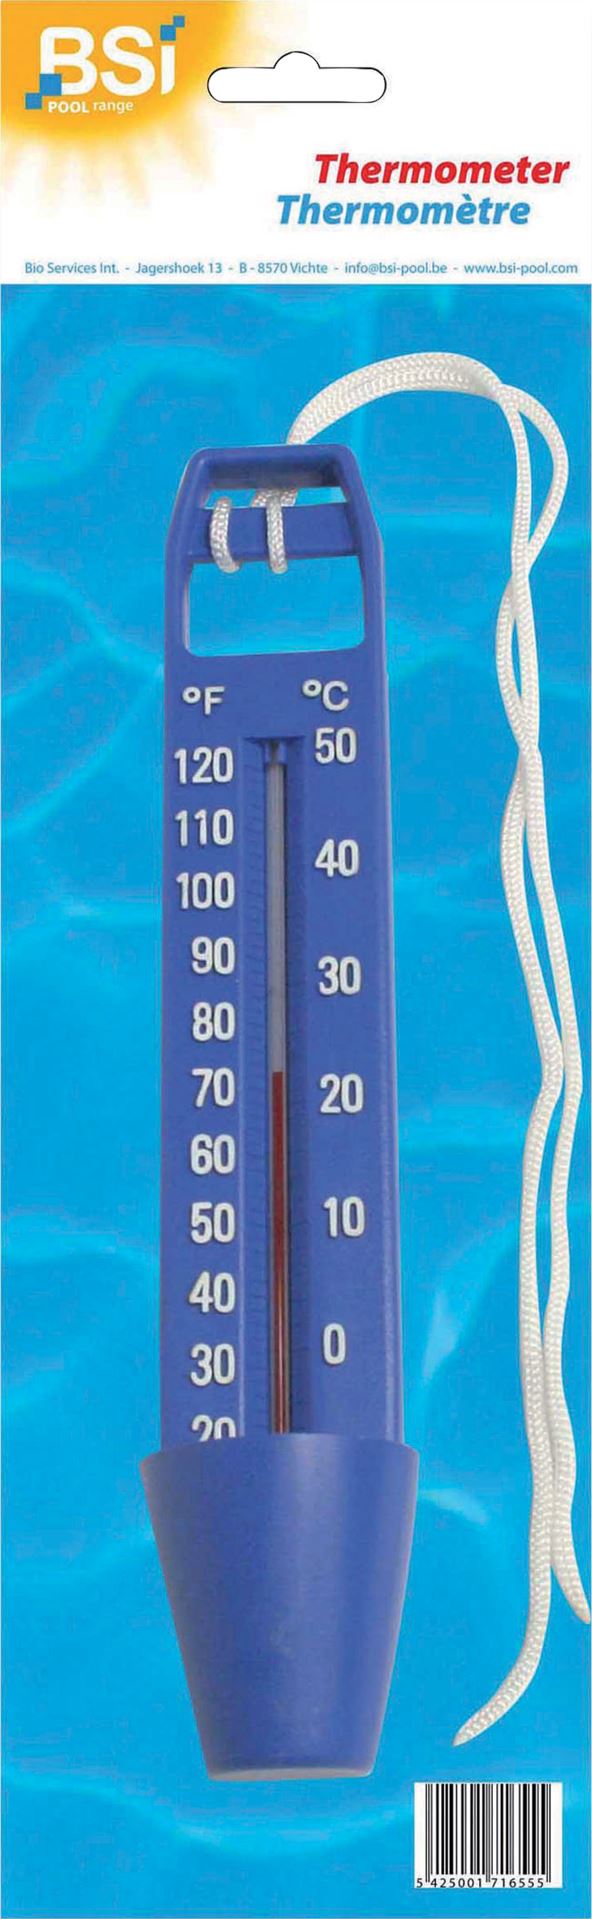 Onderwater-thermometer-van-26cm